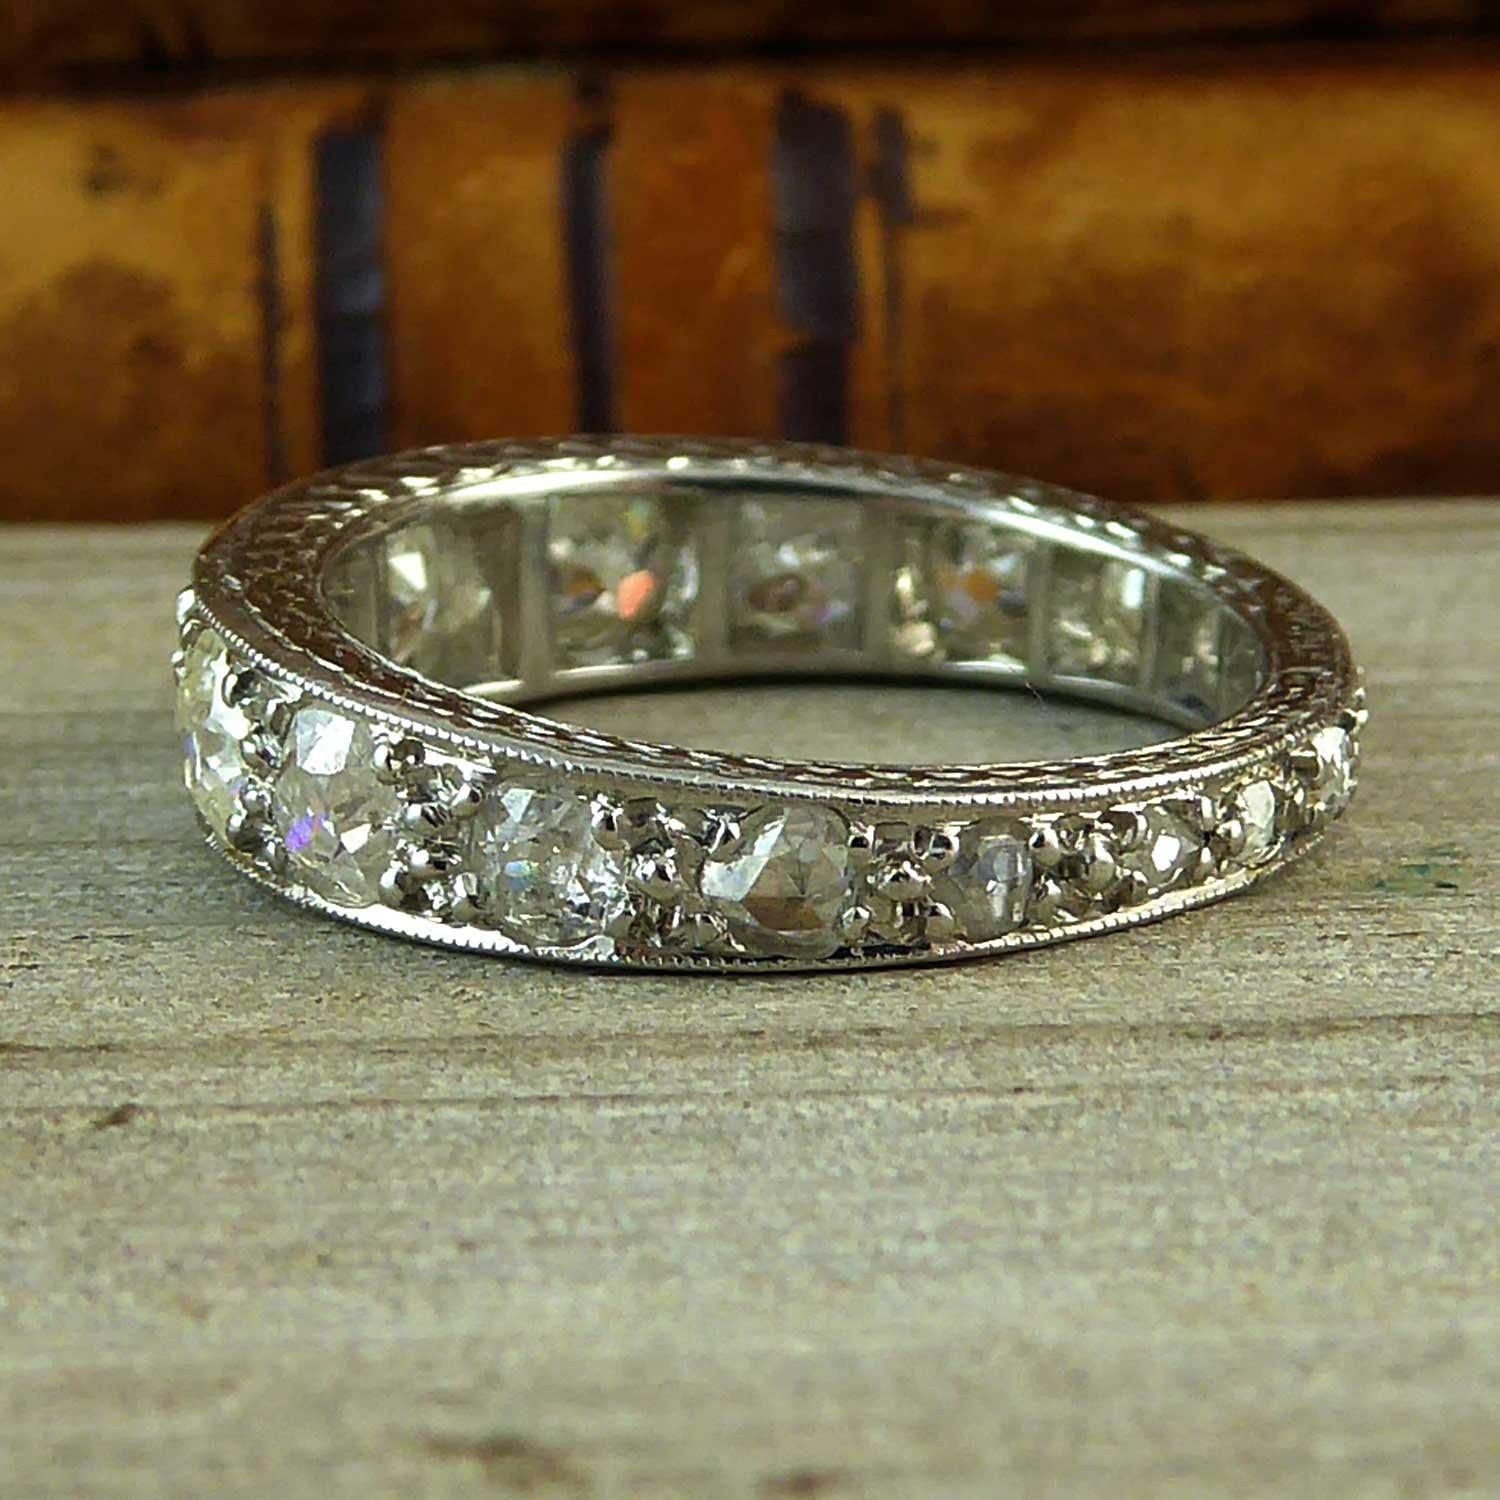 Vintage 1.85 Carat Diamond Eternity Ring, circa 1930s-1940s, Platinum 1